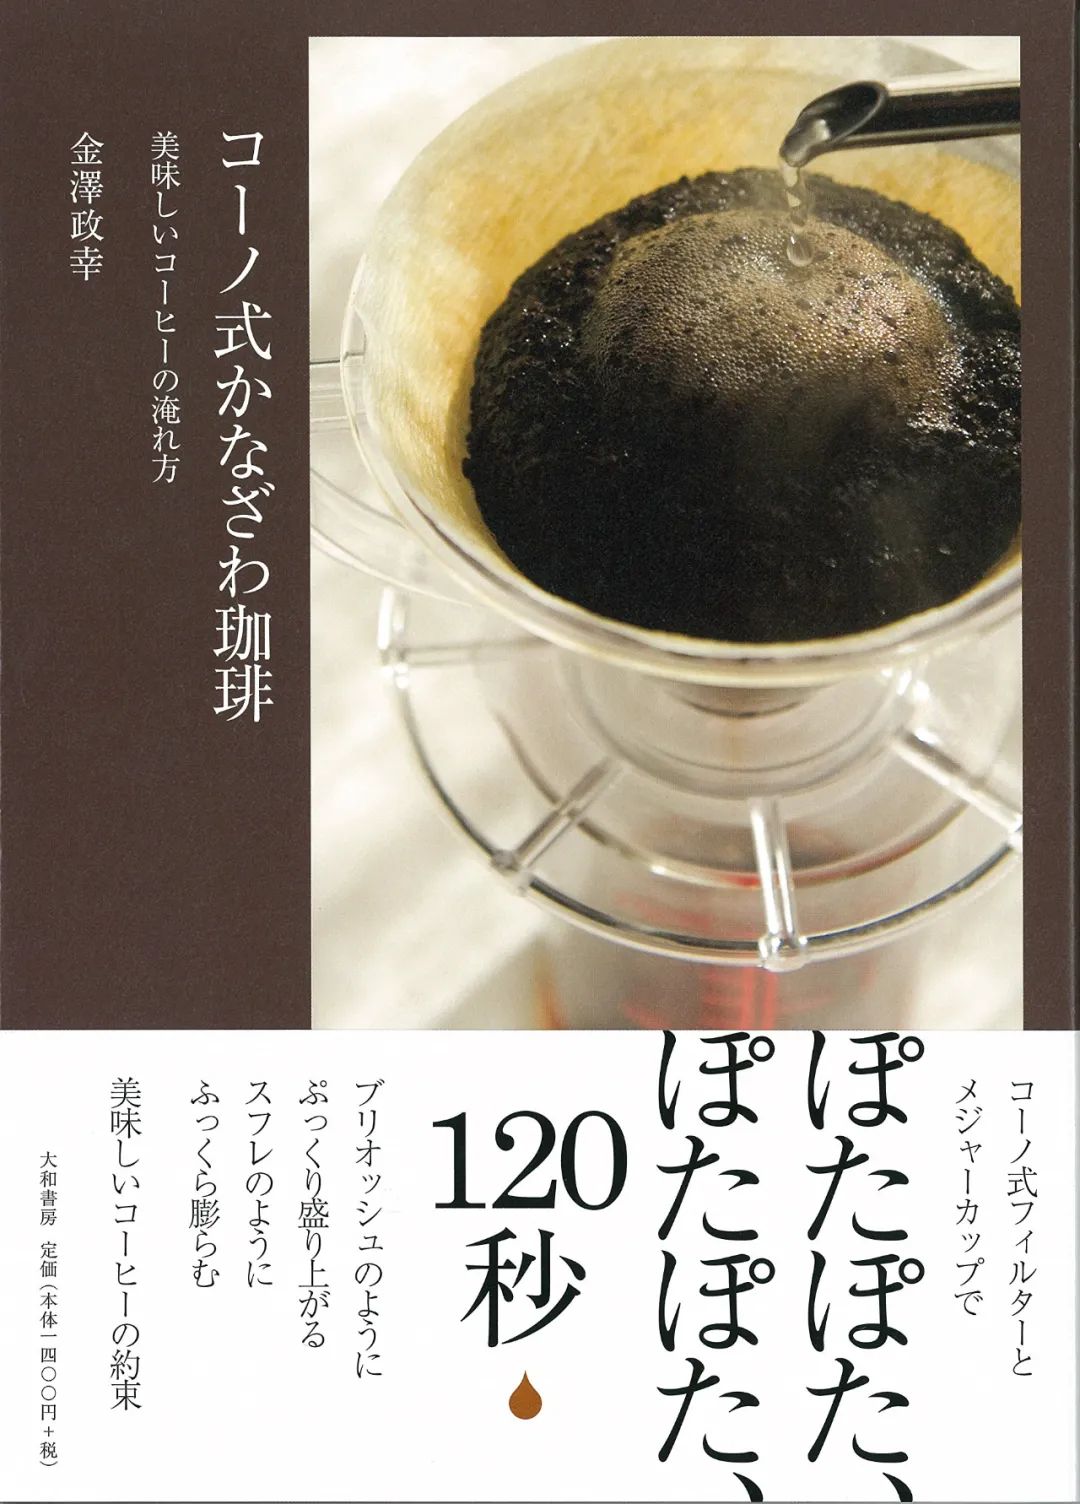 Japanese drip hand-brewed coffee Kanazawa flow chart solution good hand-brewed coffee technique introduction